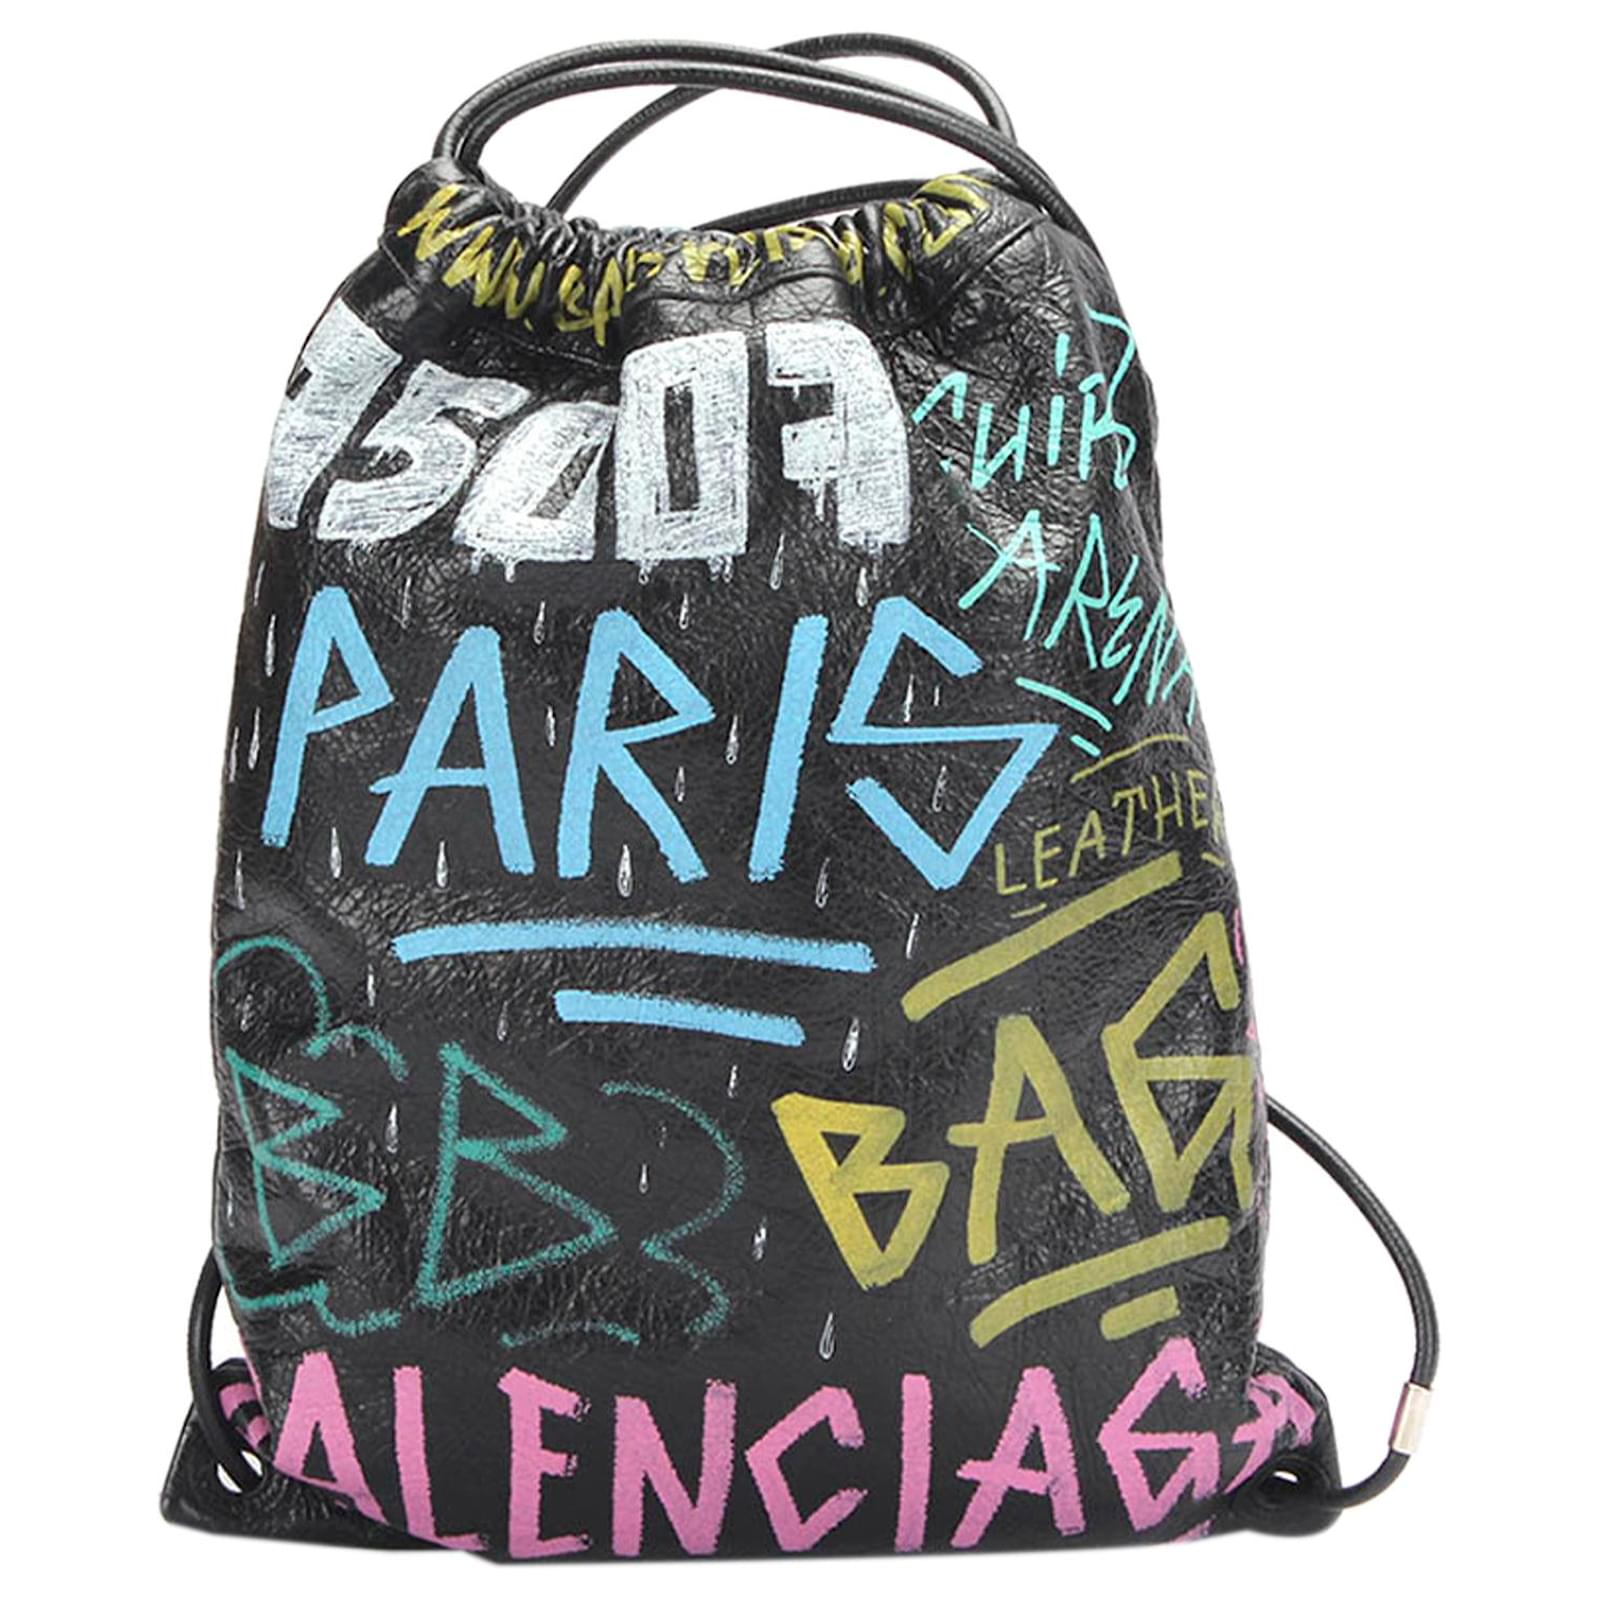 Balenciaga Everyday Graffiti Leather Crossbody Bag